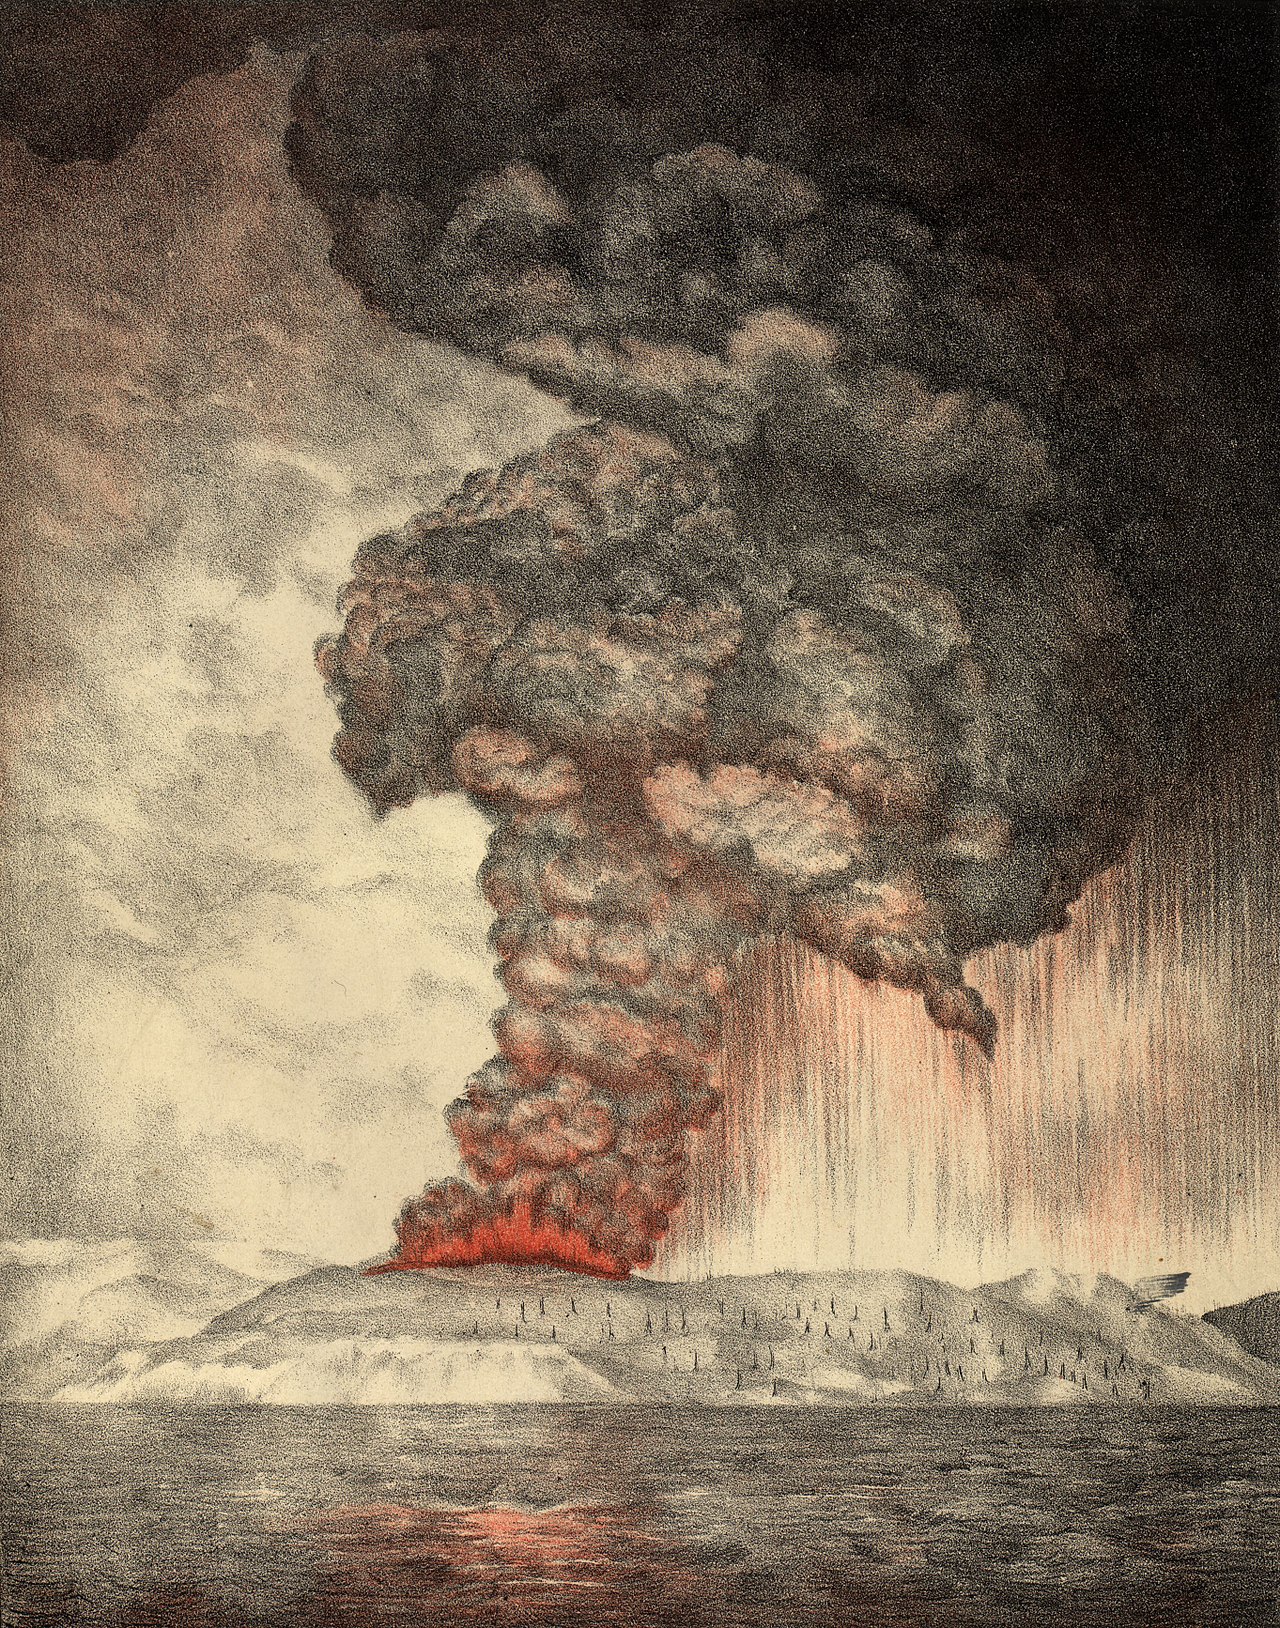 1280px-Krakatoa eruption lithograph